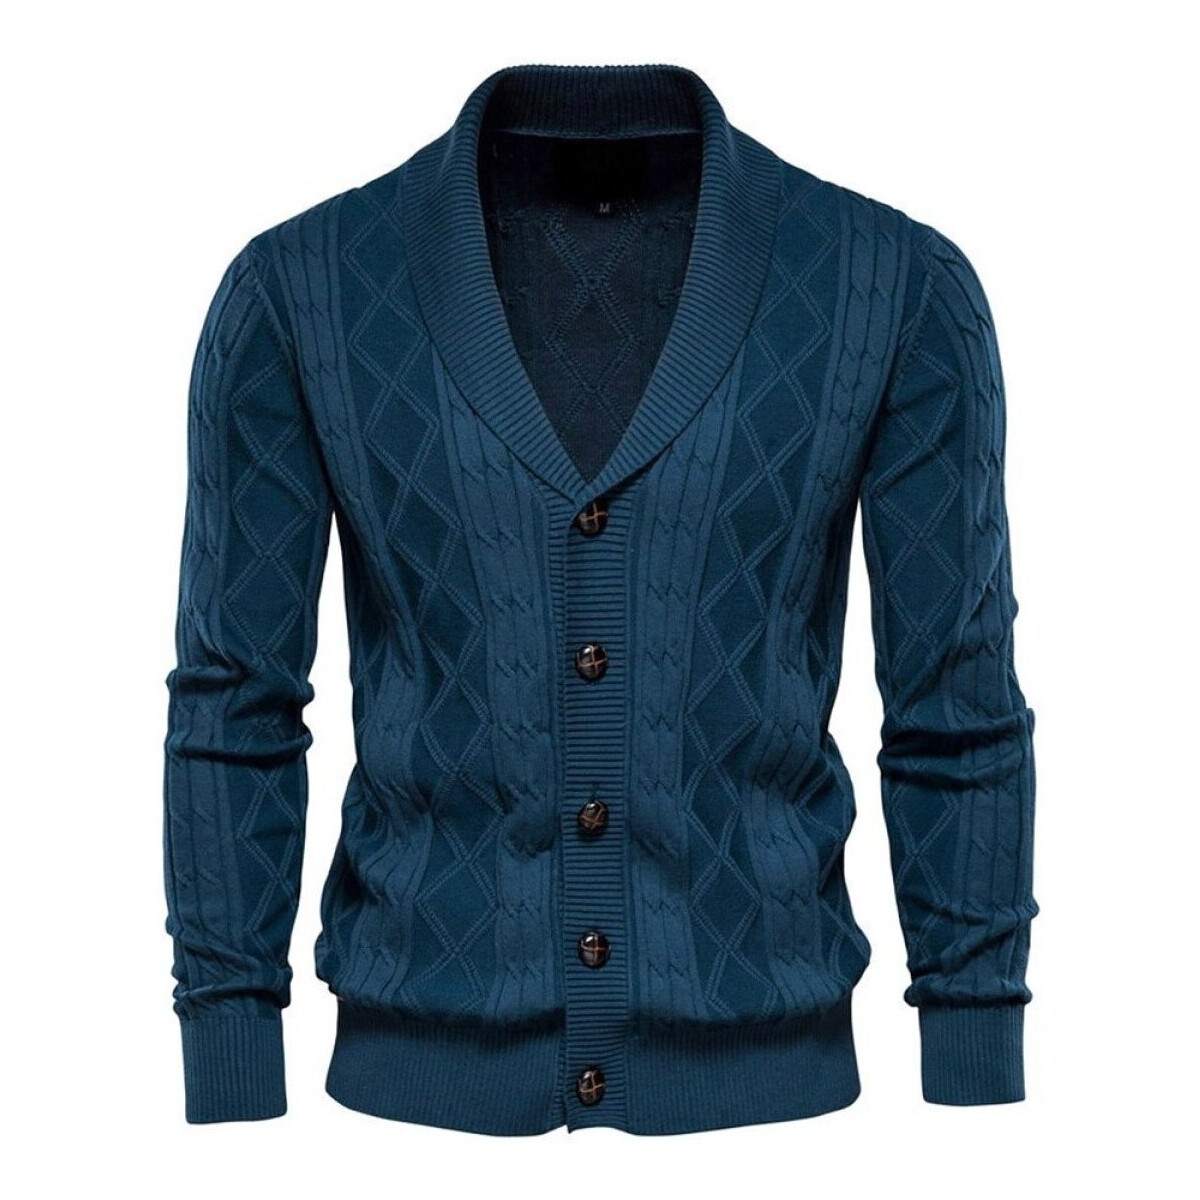 Textiel Heren Vesten / Cardigans Atom Y168_Dark_blue Blauw